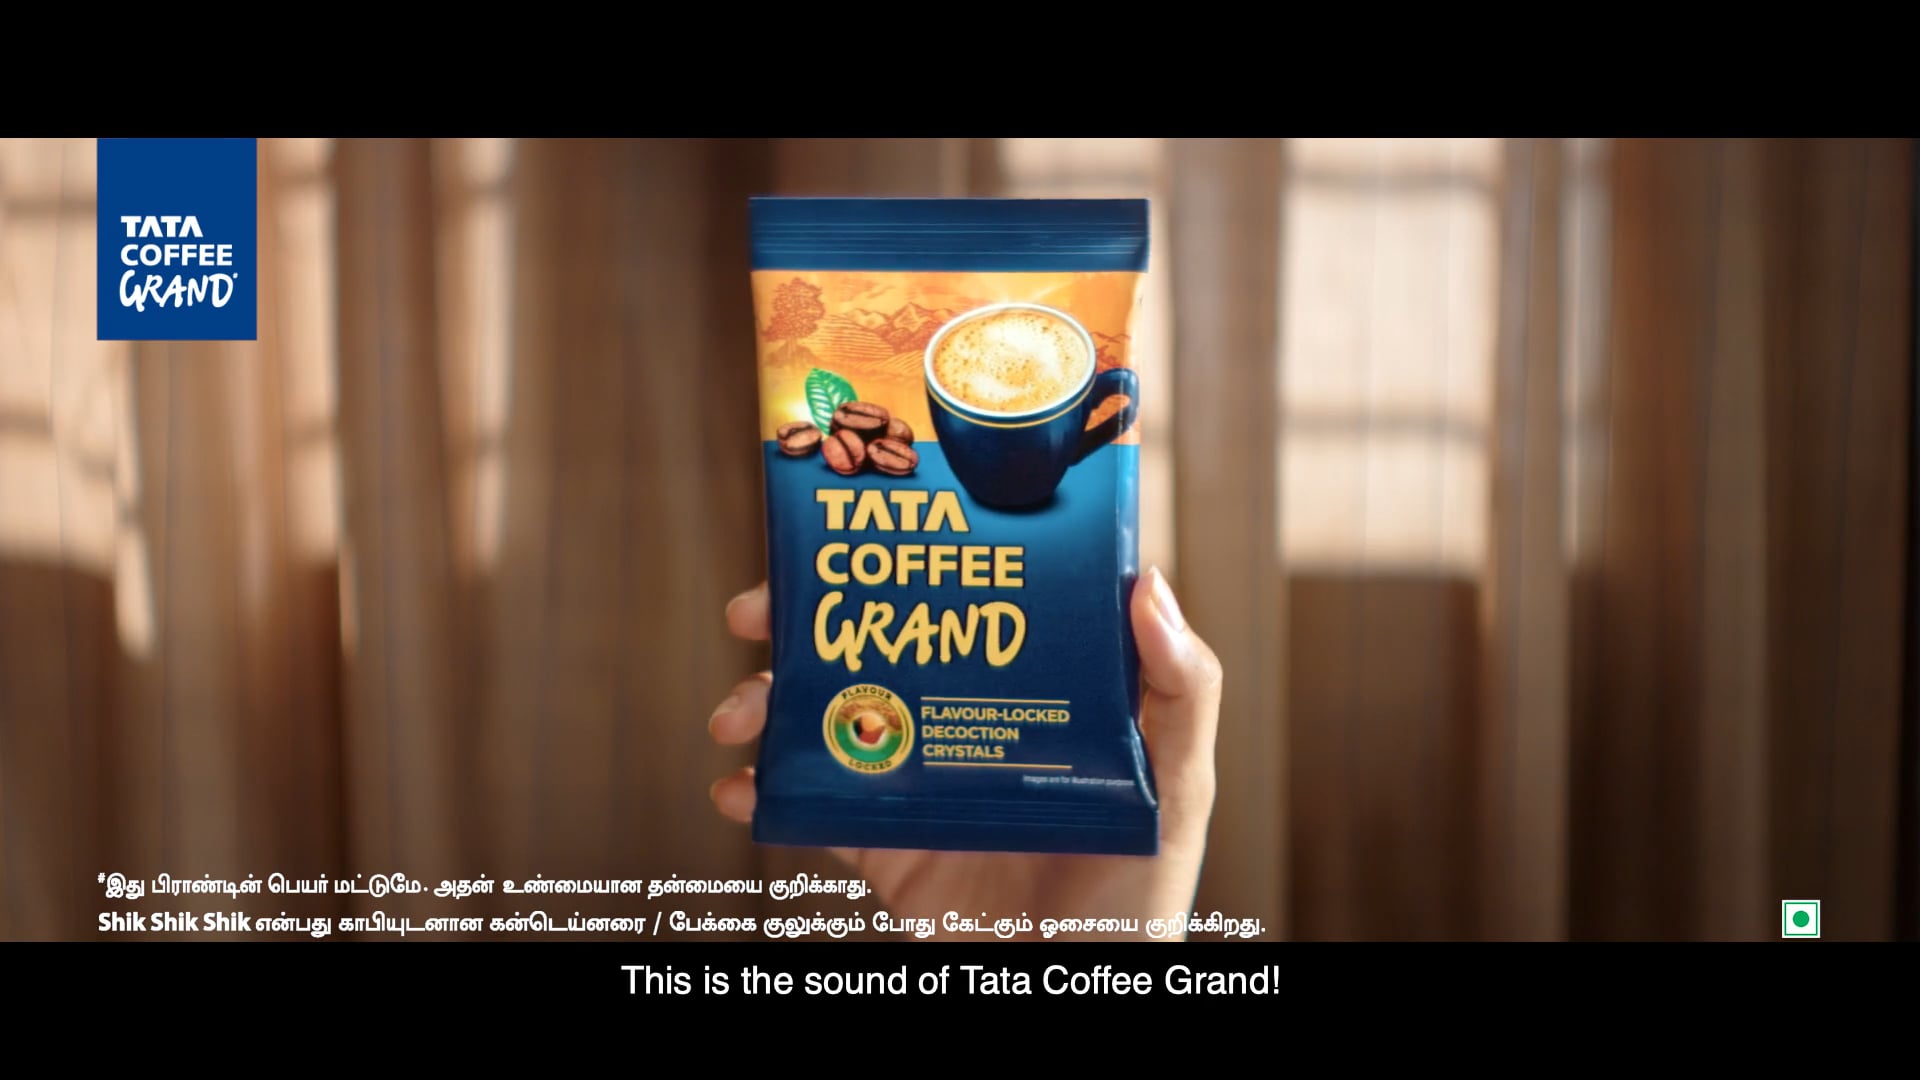 TATA COFFEE GRAND “Shik Shik Shik” TVC - Directors Cut